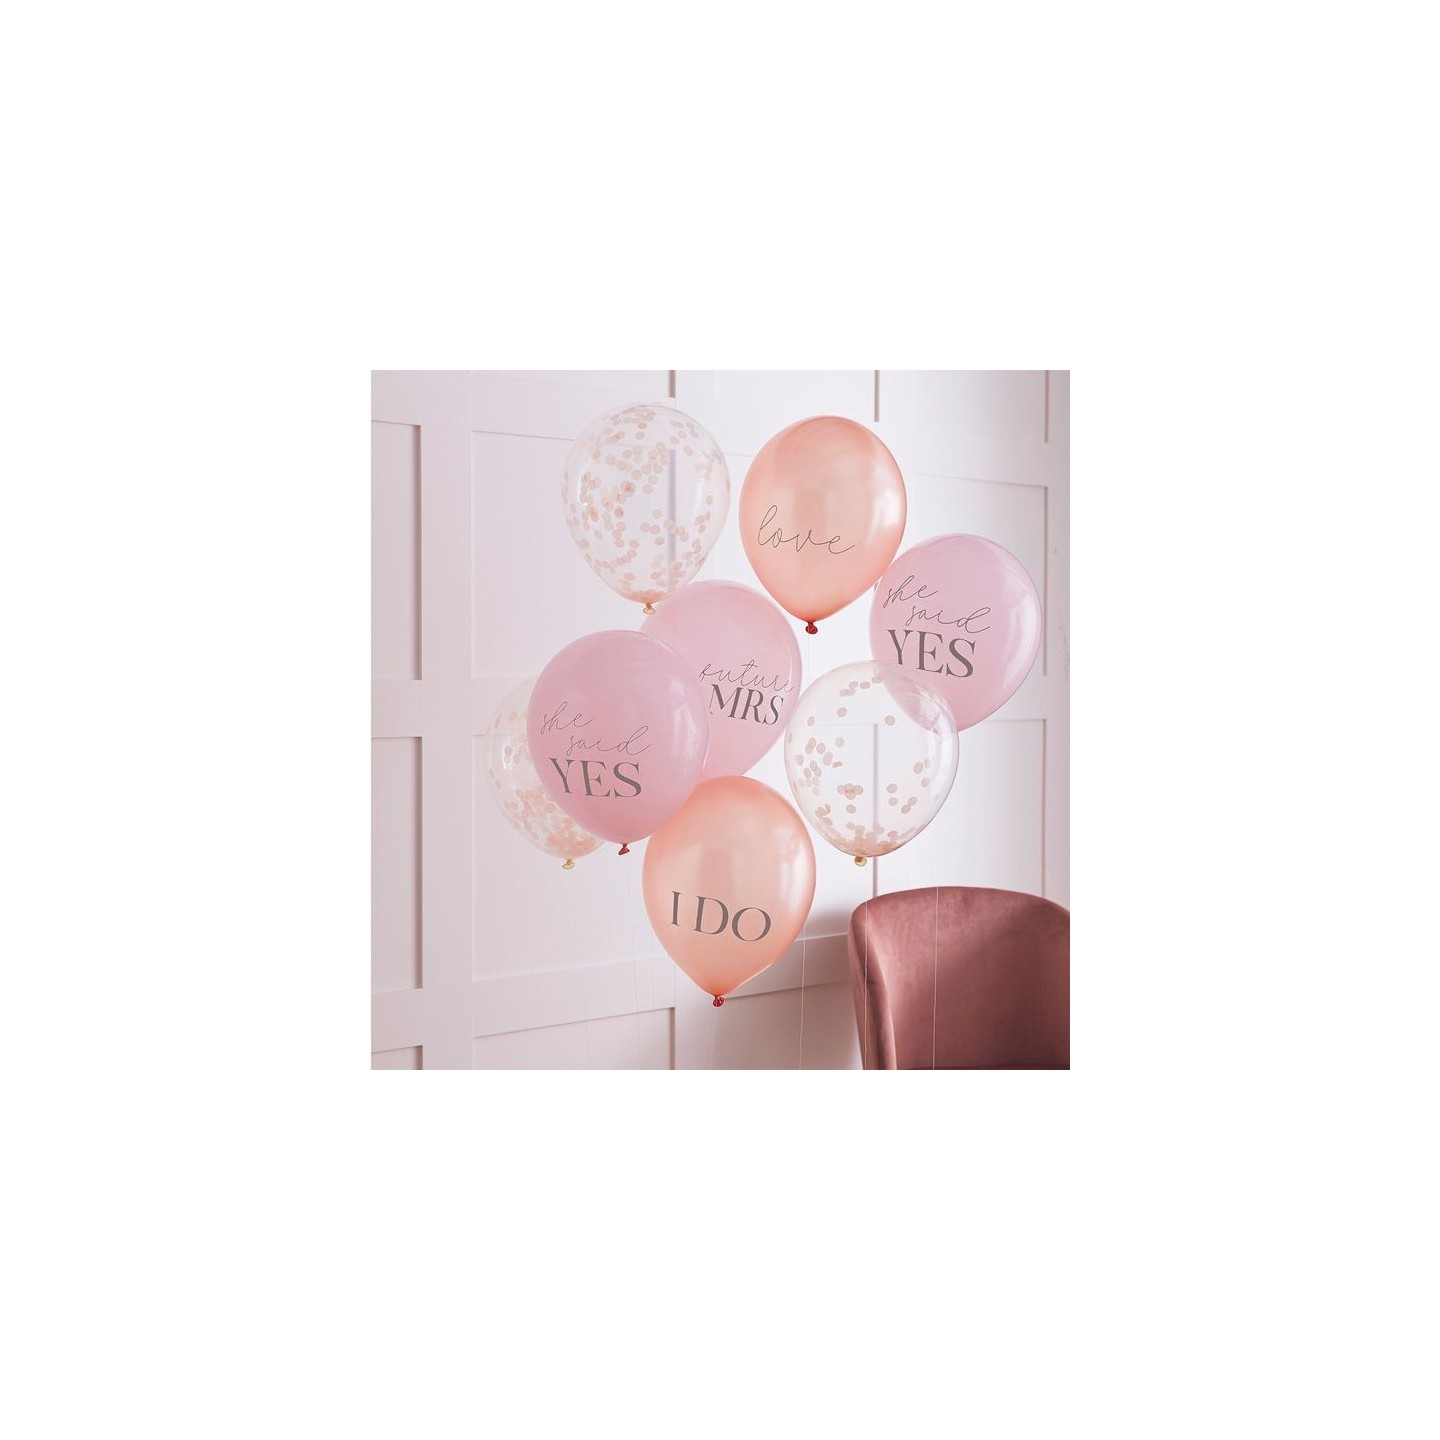 roze ballonnen mix vrijgezellen decoratie